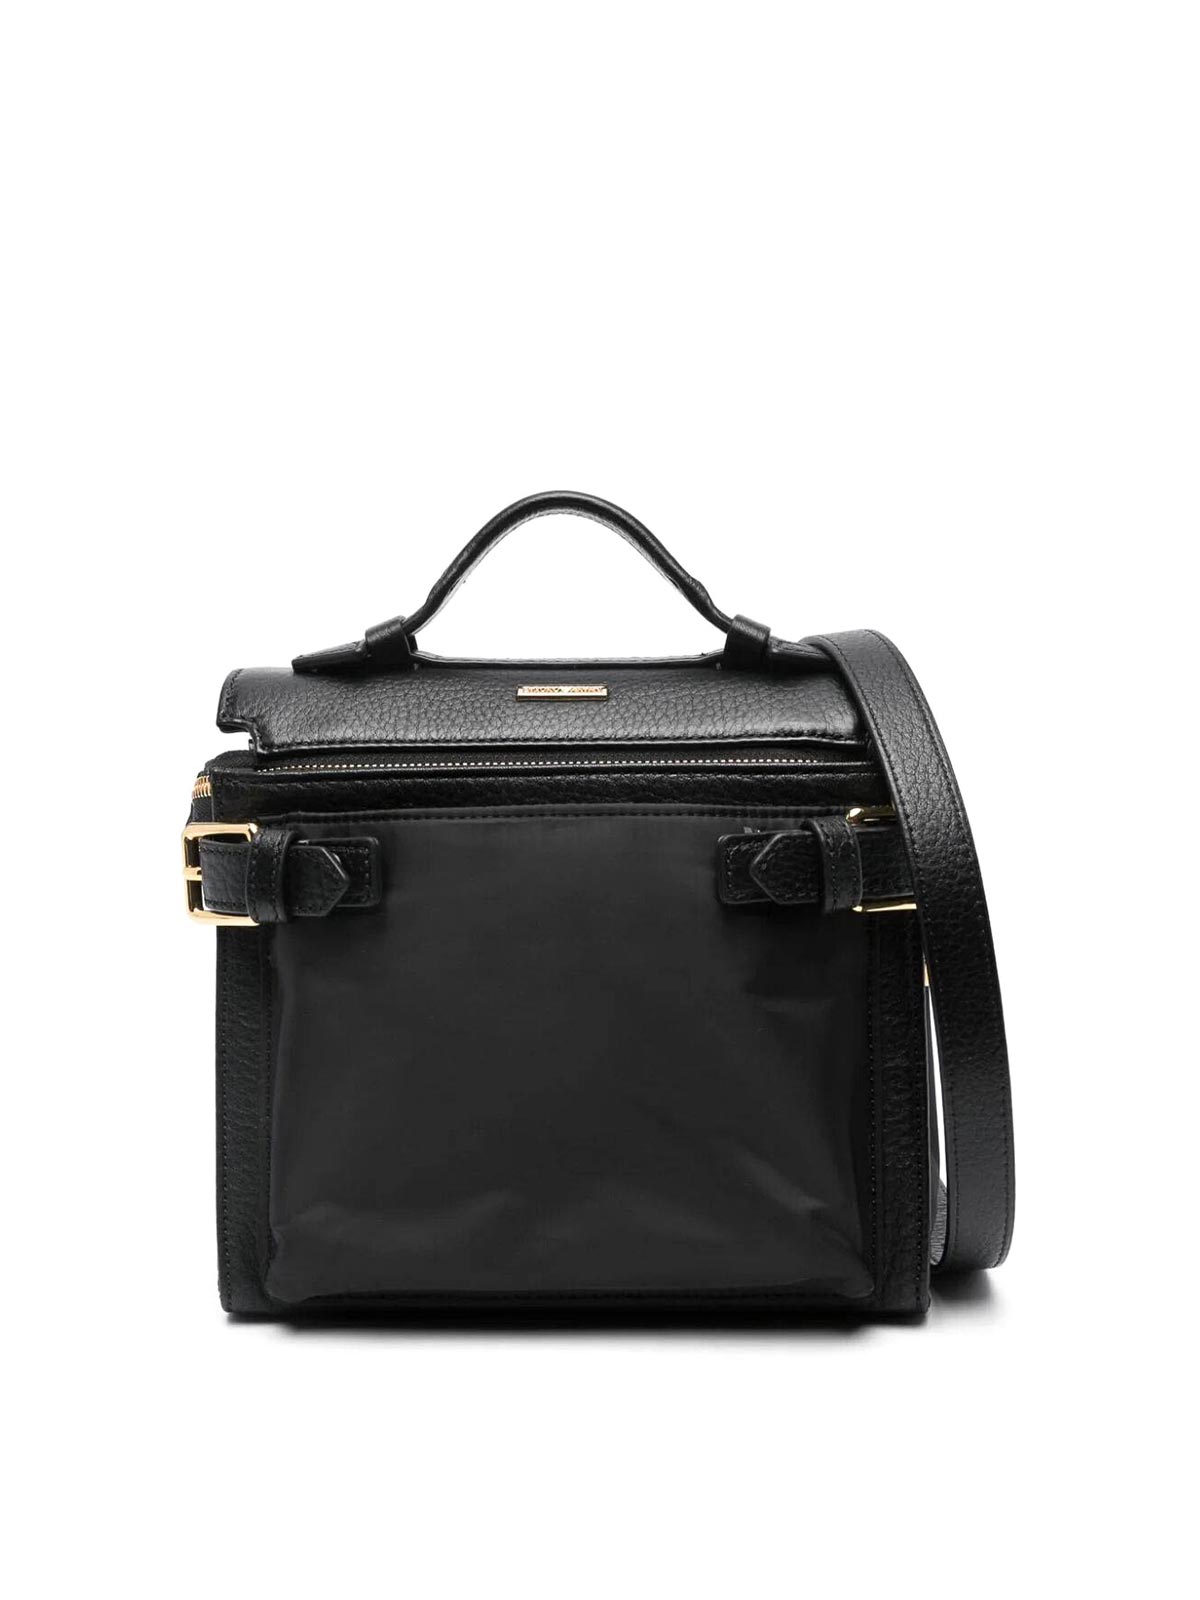 Armani Exchange Logo Tote Bag in Black | Lyst